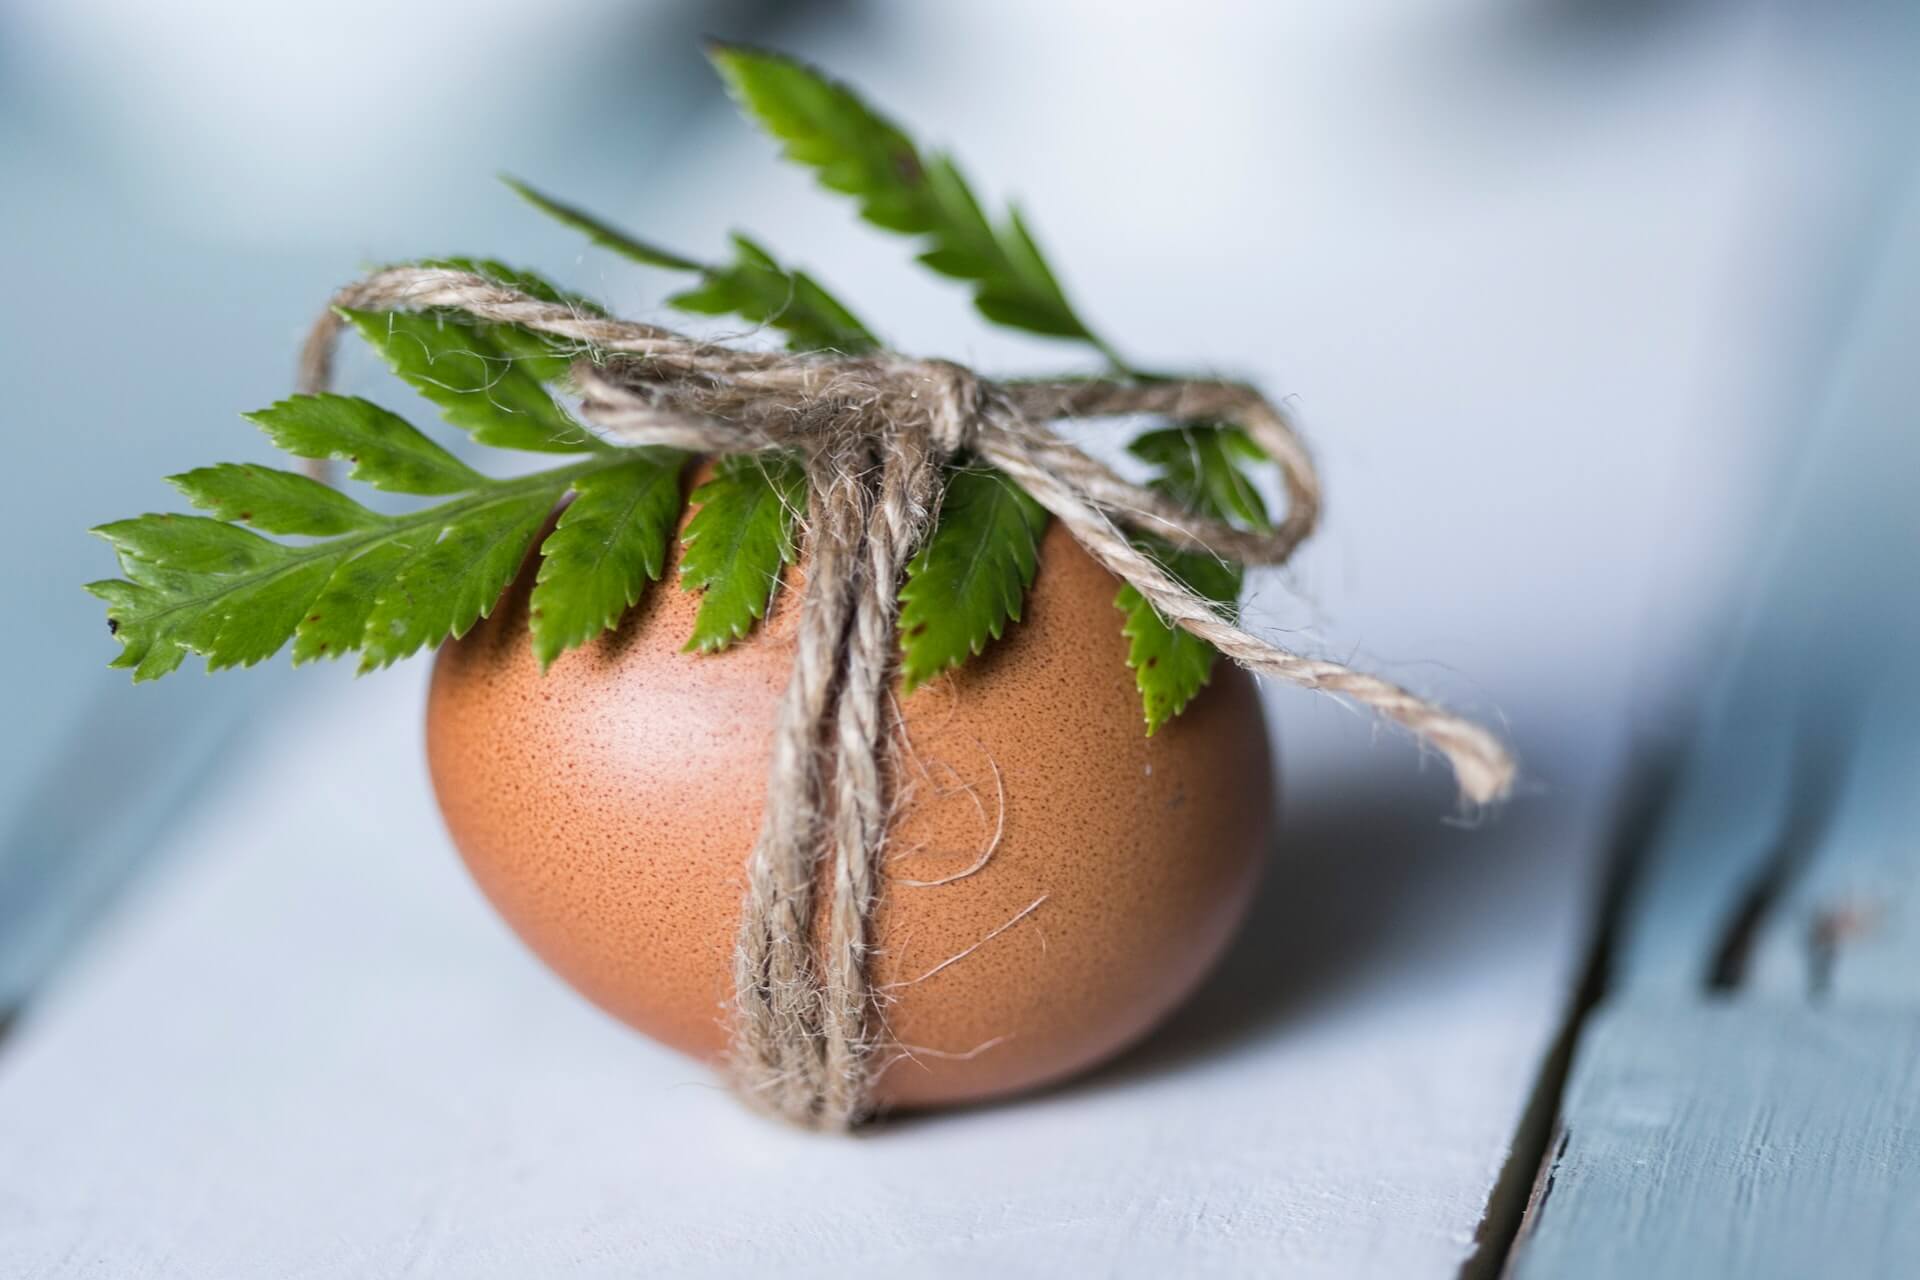 How to Make a keto Egg Fast: Rules, Benefits, Risks, and Sample Menu Recipes